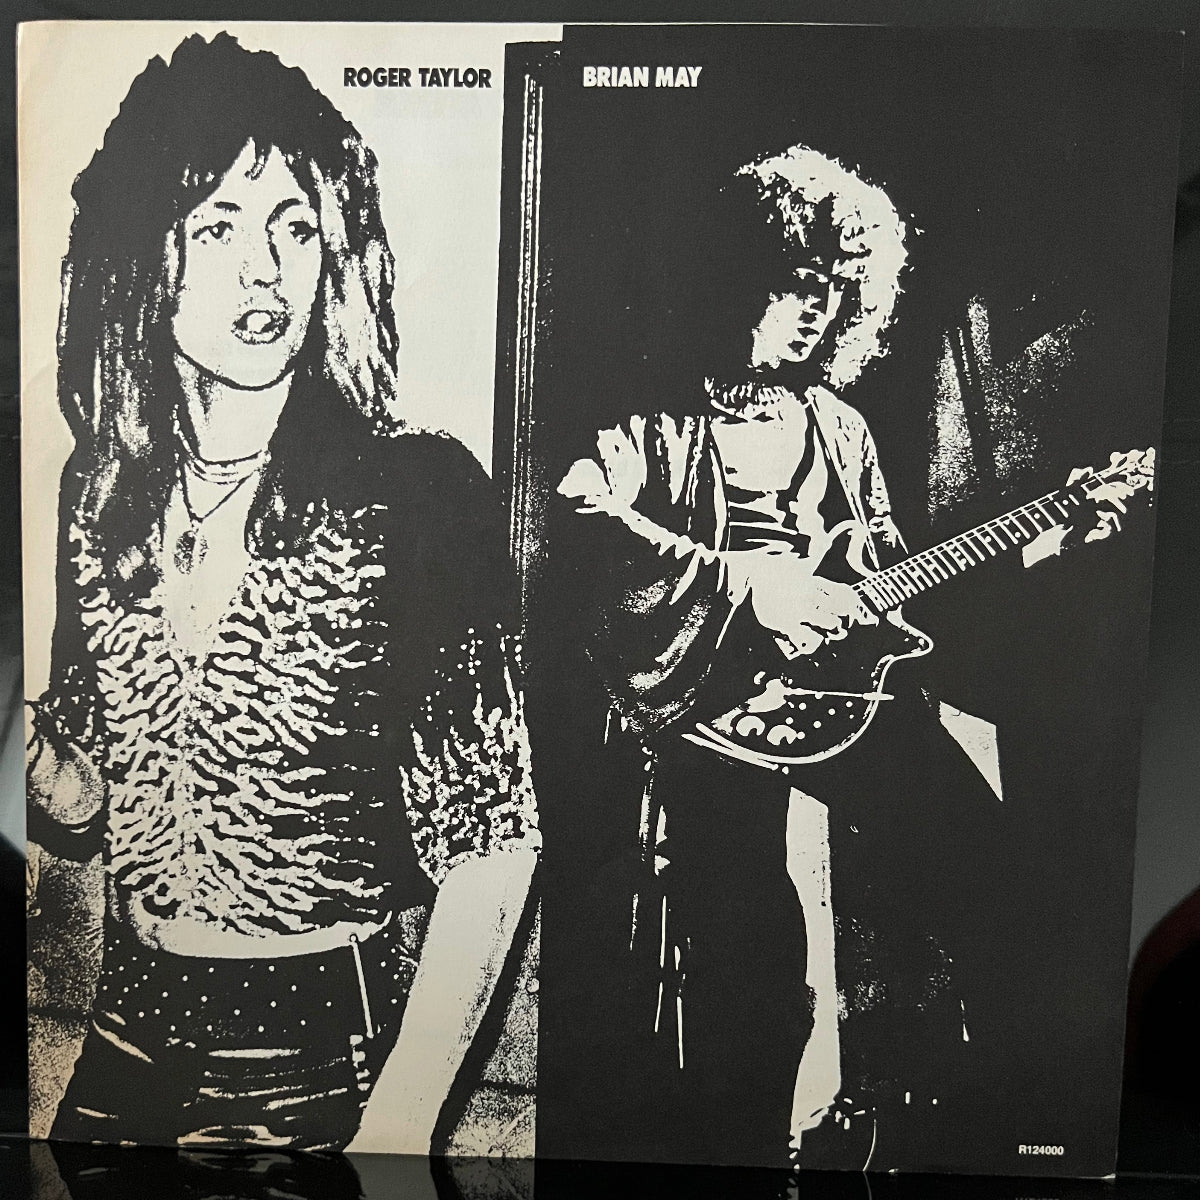 Vintage 1975 Queen Sheer Attack Original VTG Vinyl Album